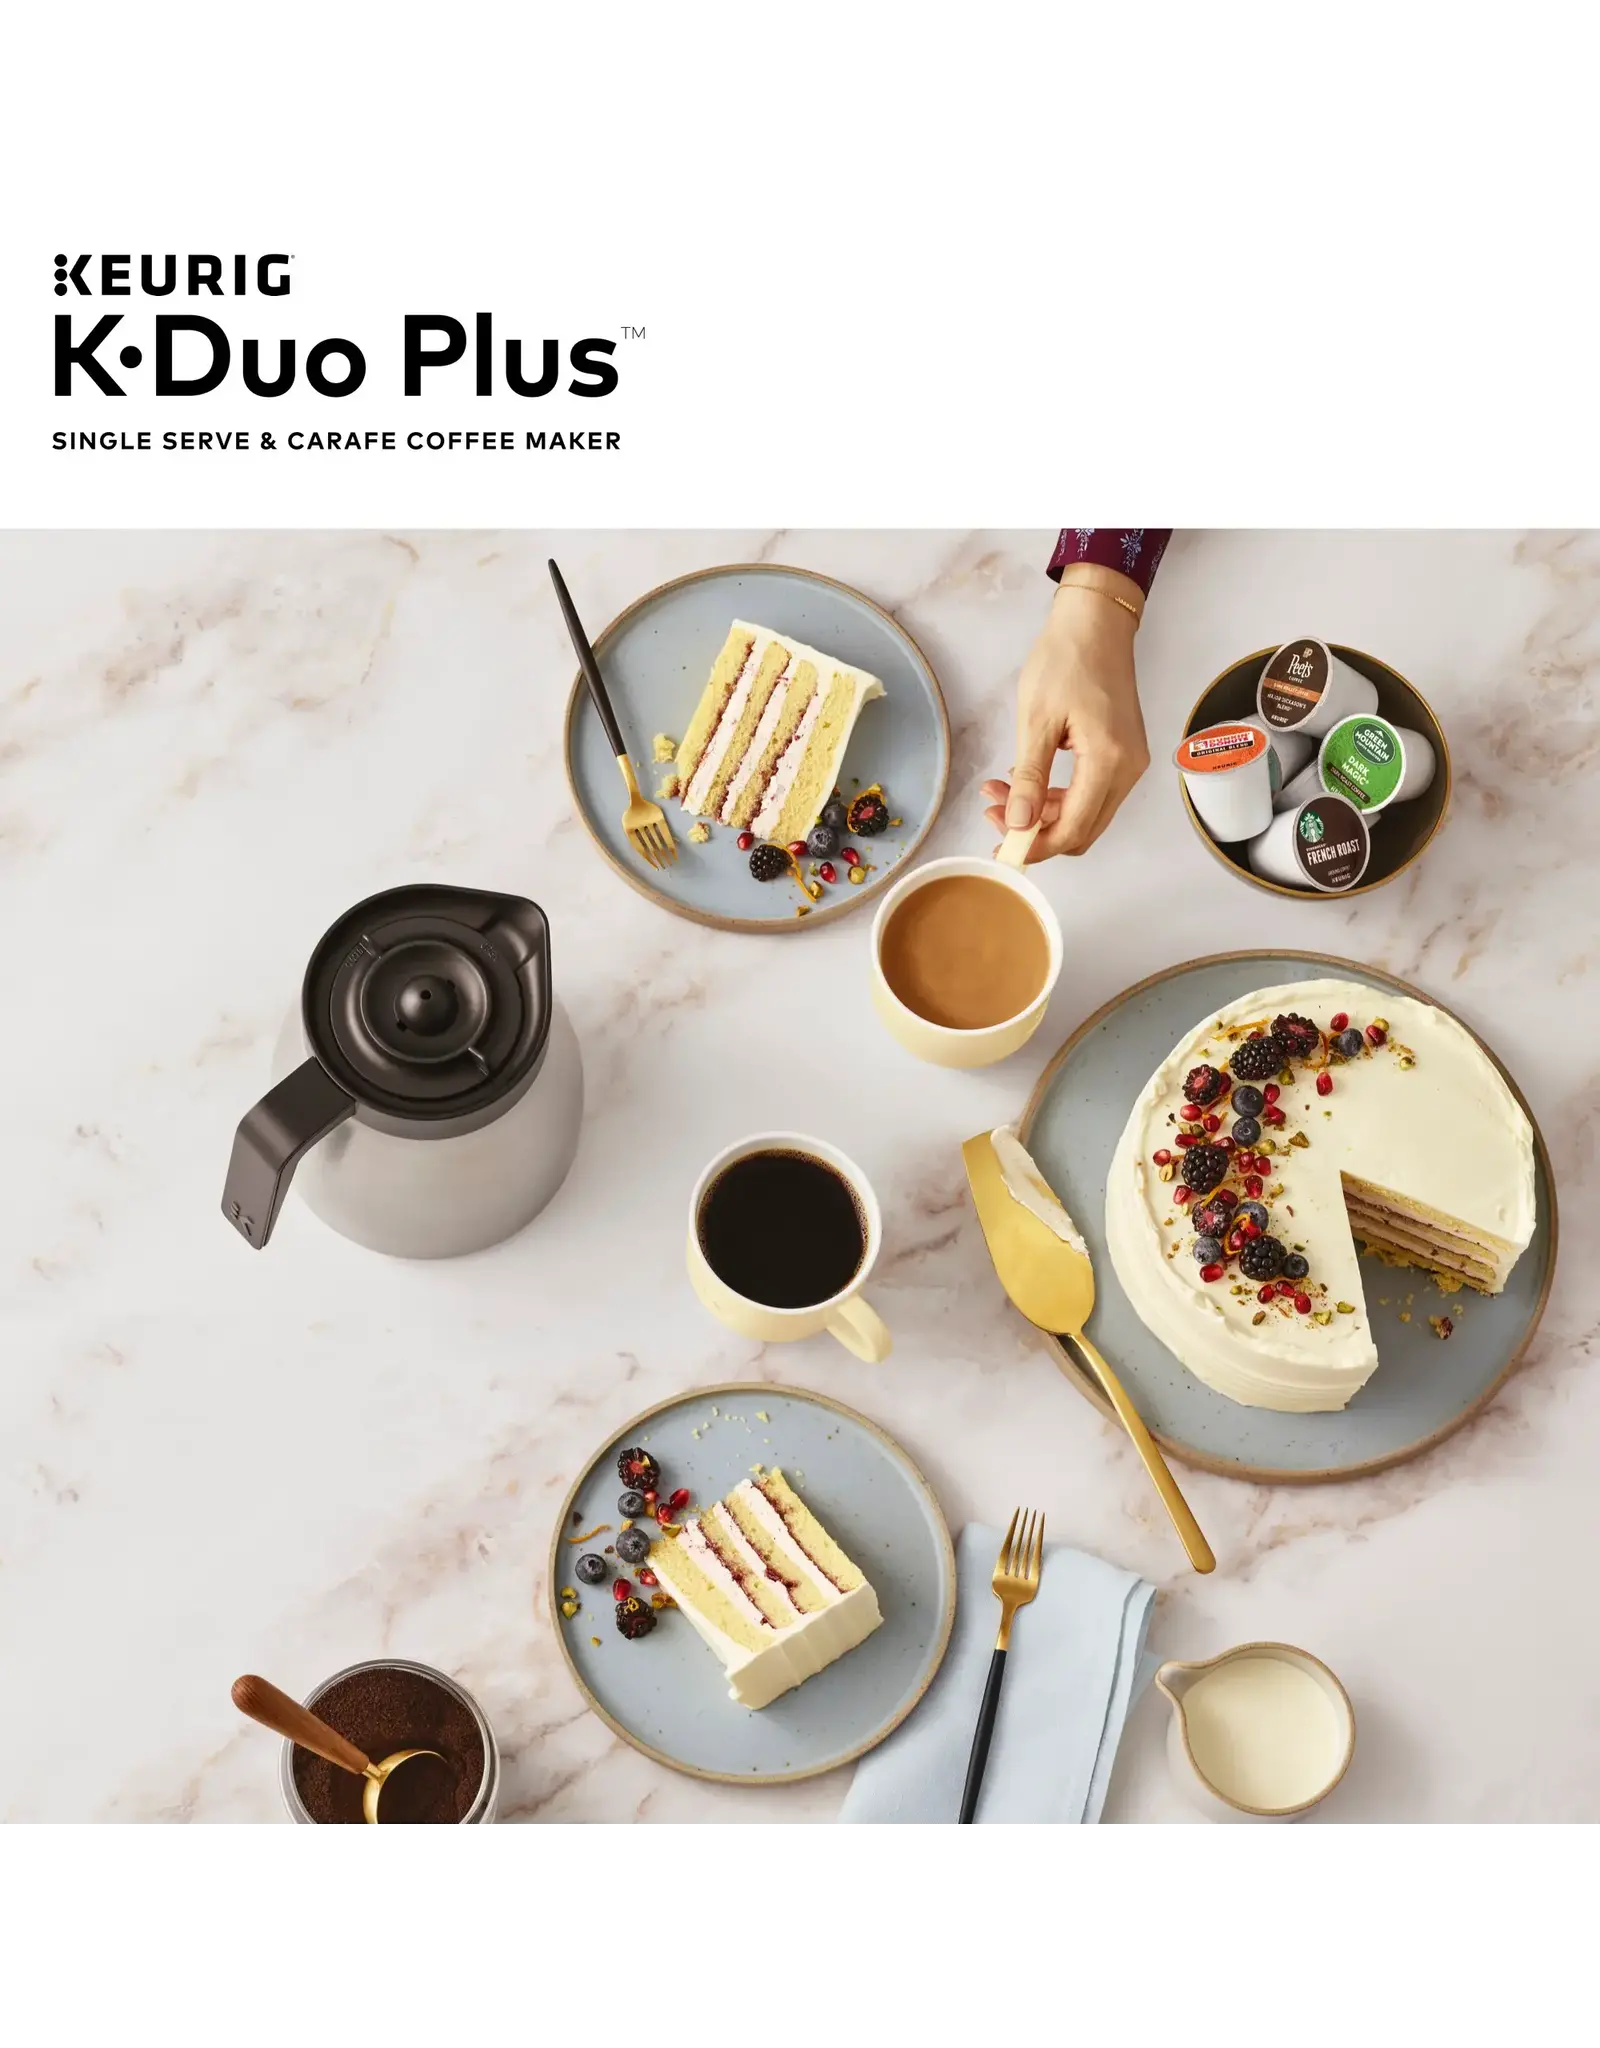 K Duo Plus Not Making A Full Pot : r/keurig